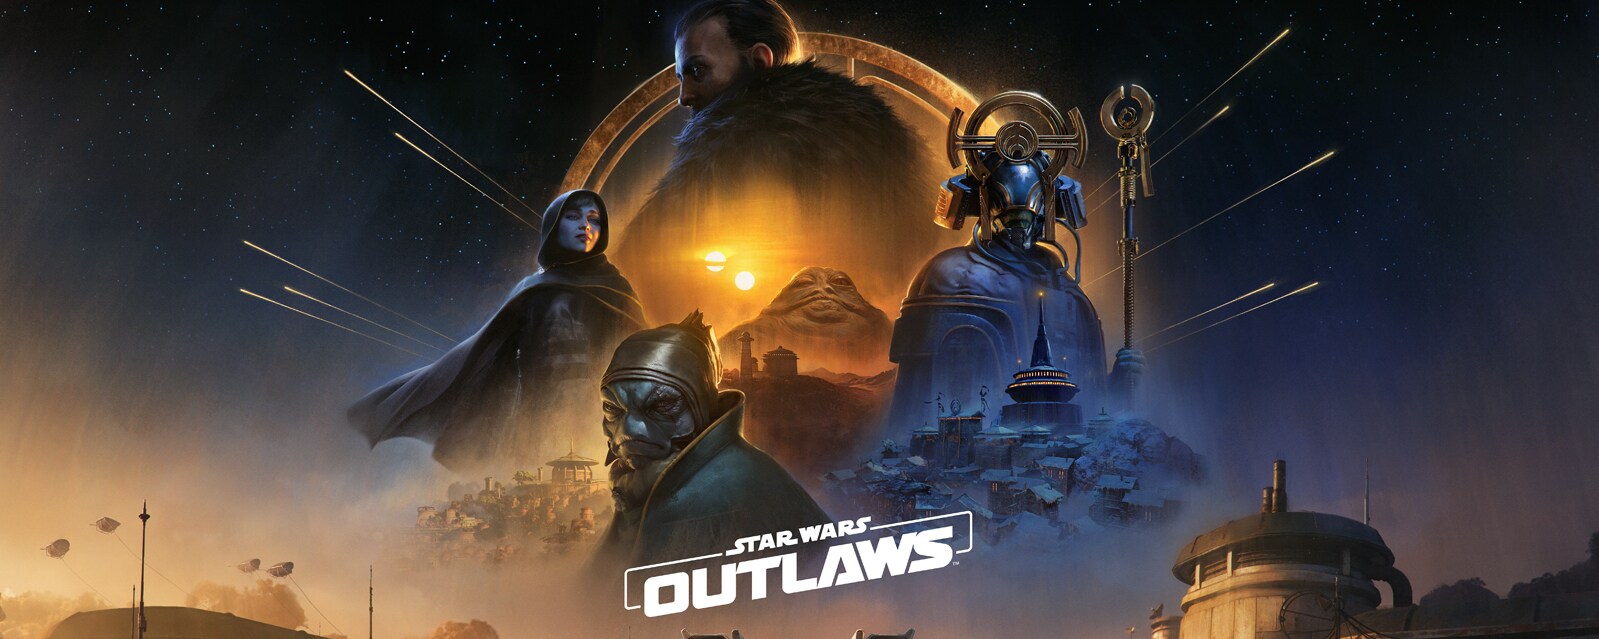 Star Wars Outlaws’ key art